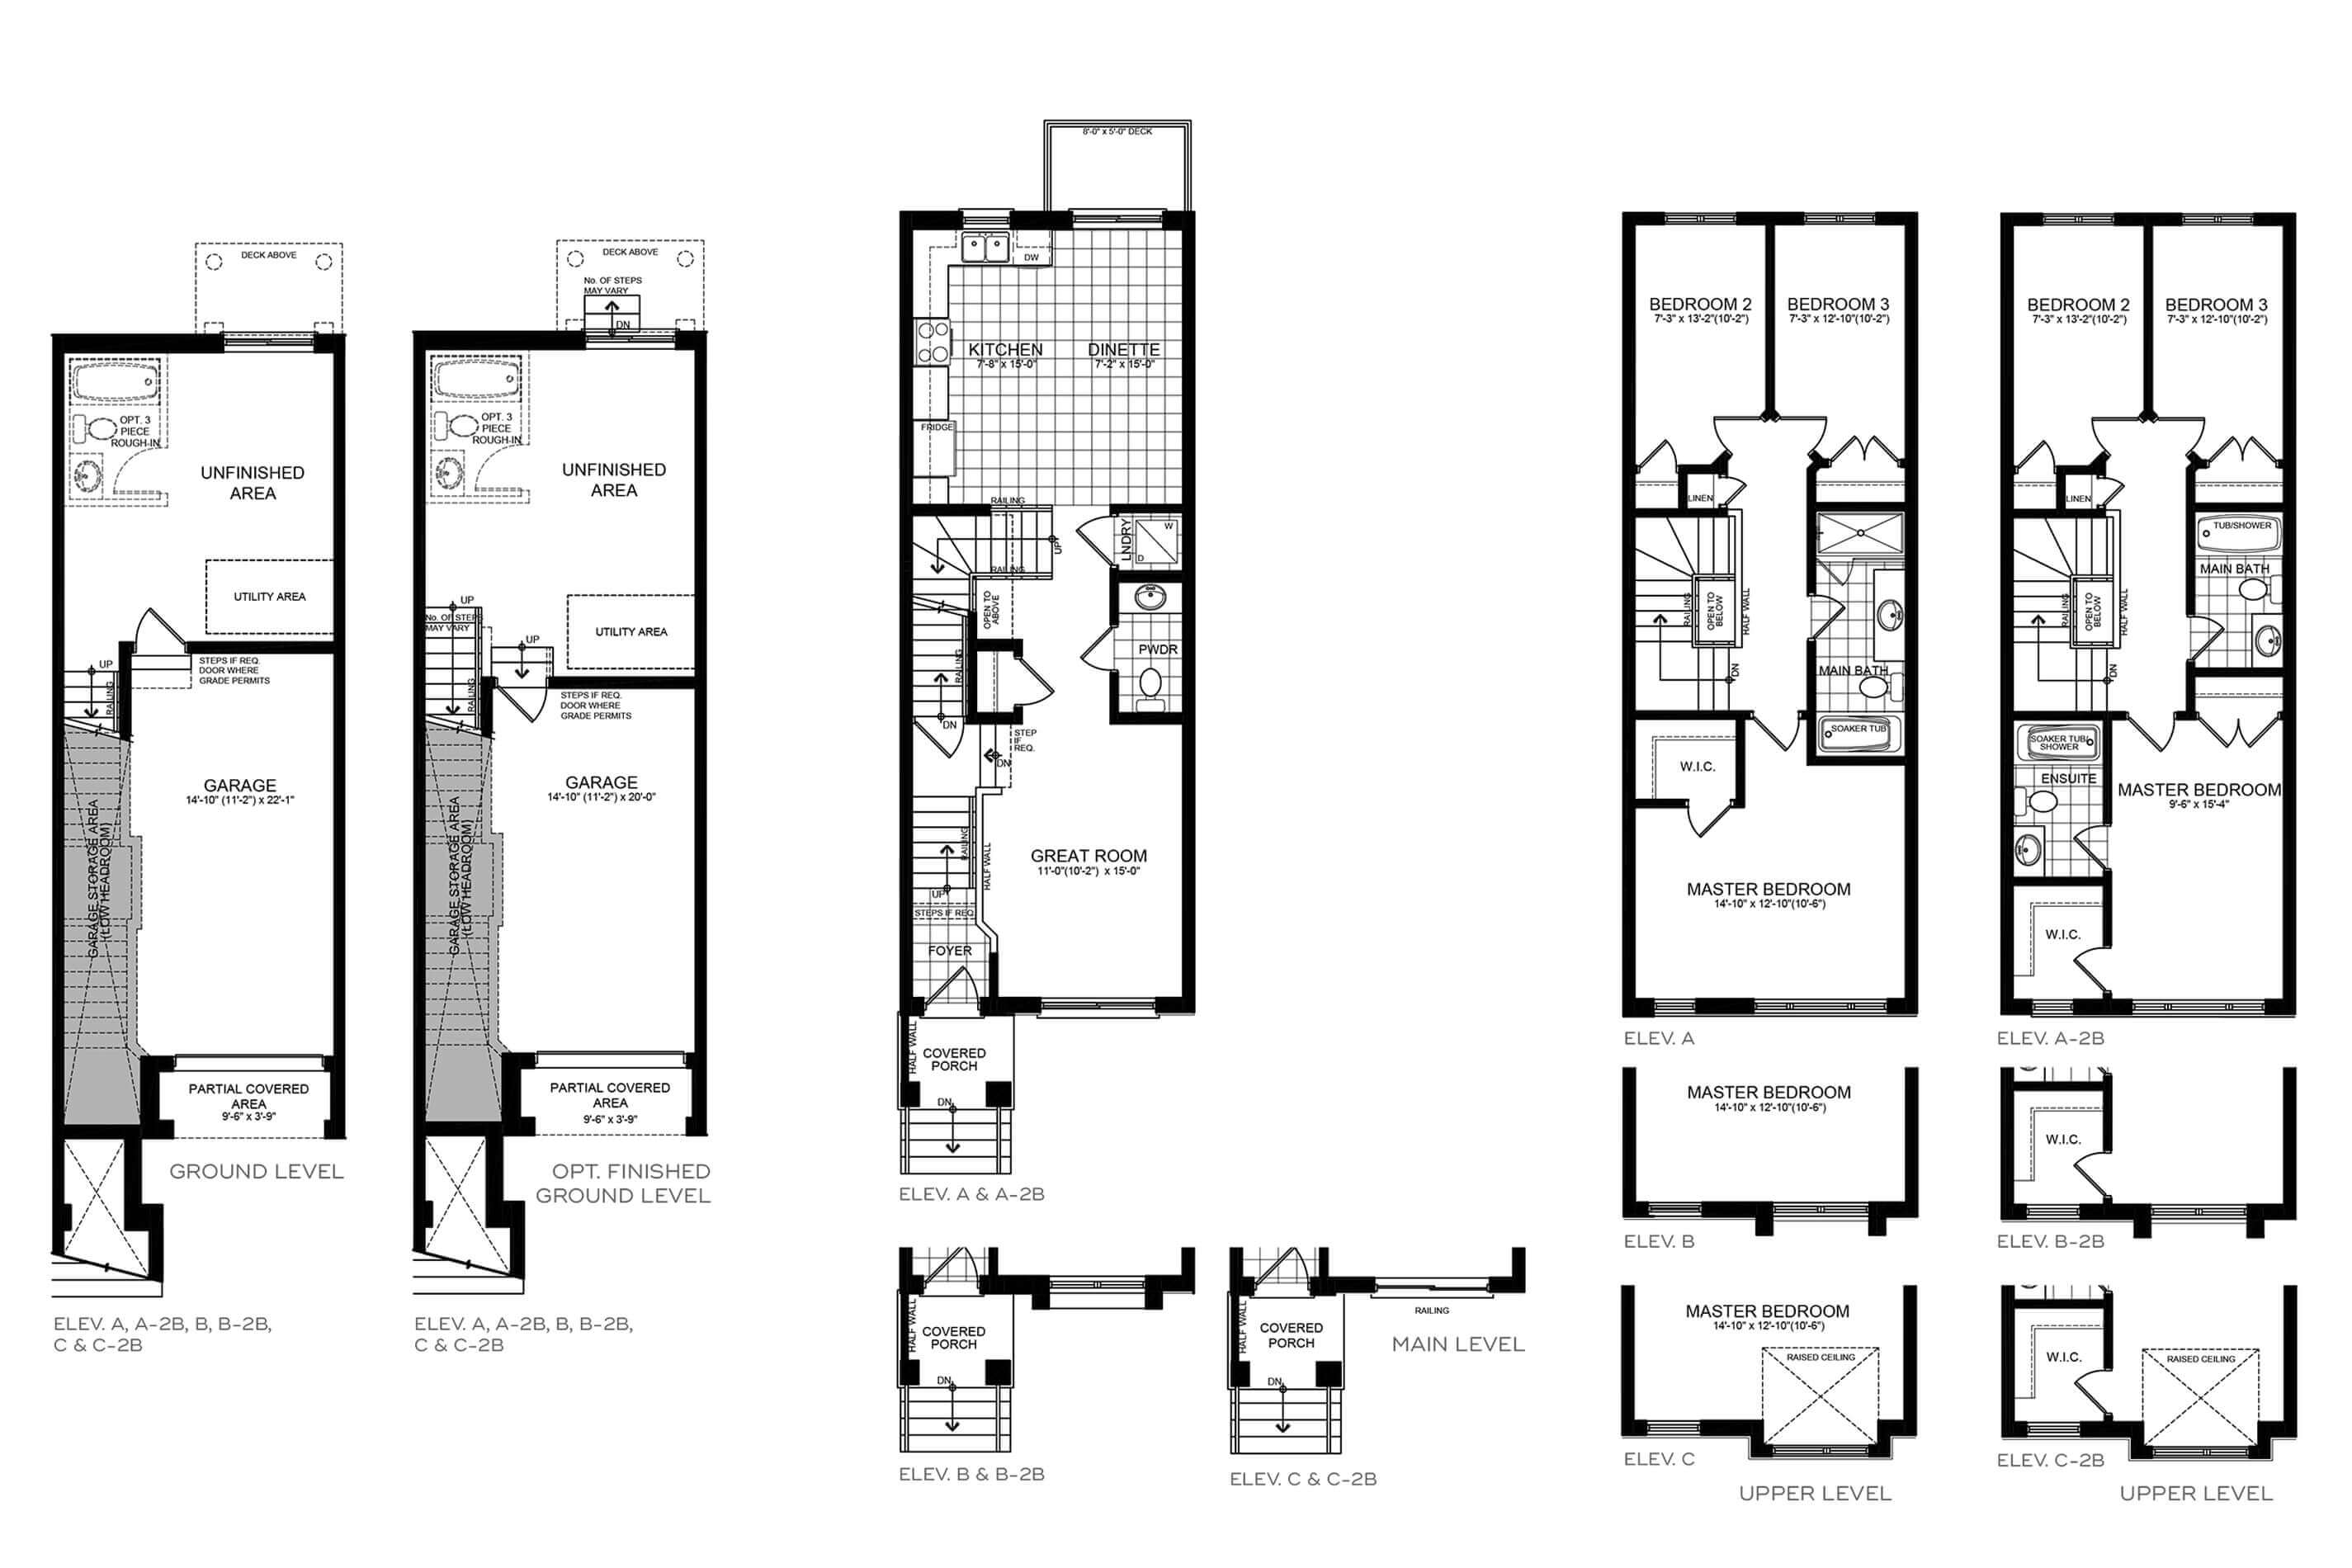  Shellard 1 (Interior) - B  Floor Plan of Sienna Woods Towns with undefined beds